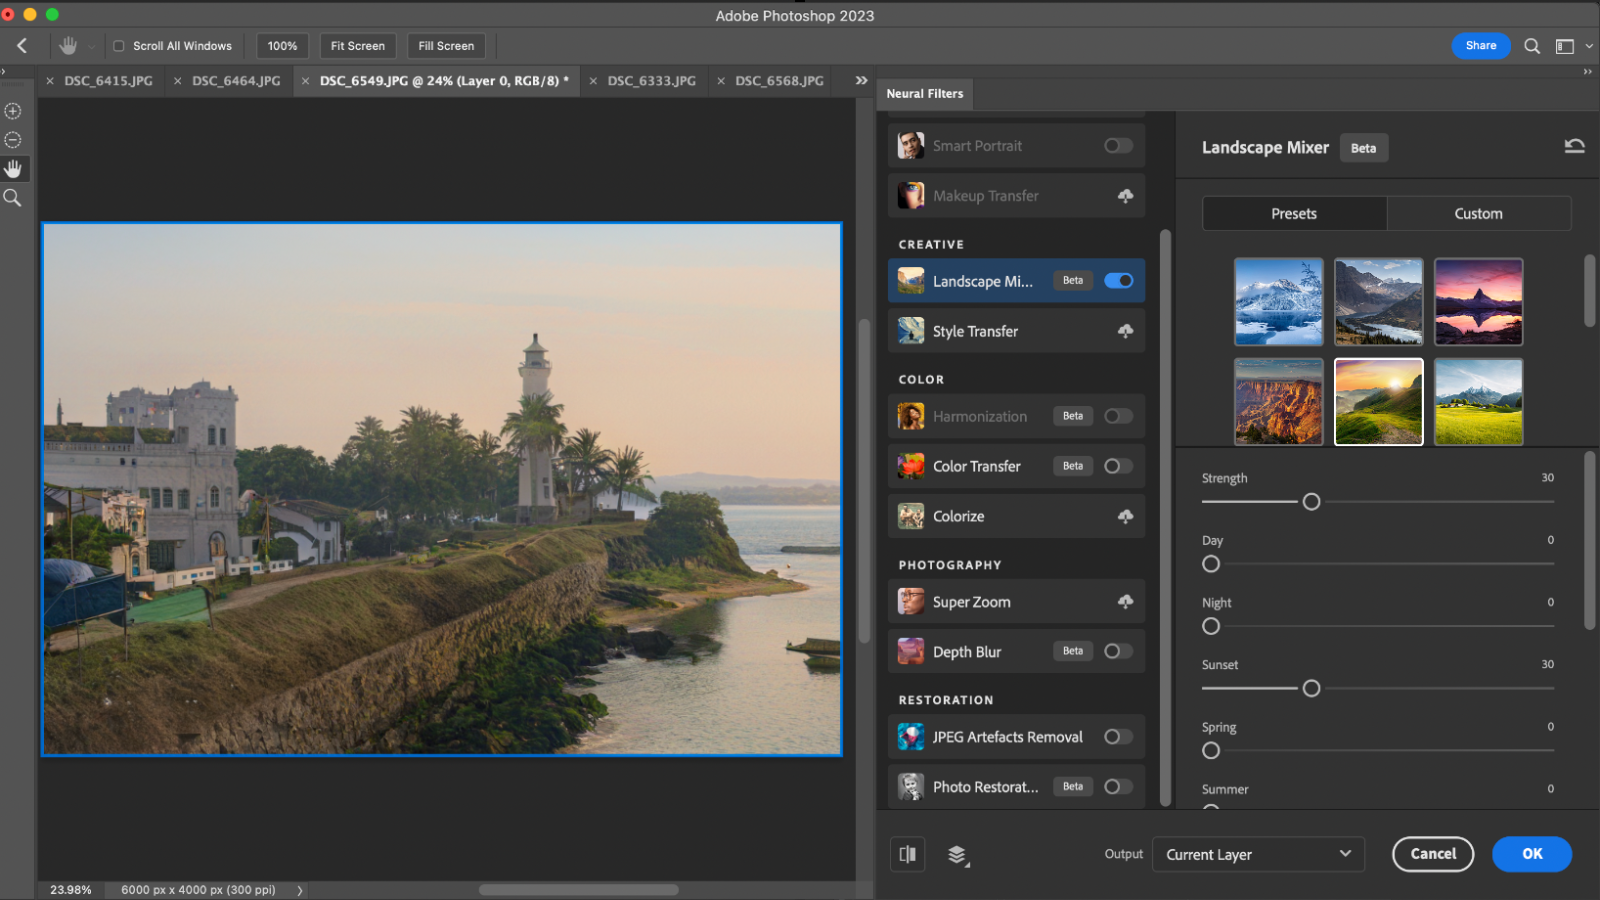 Landscape Mixer neural filter in Adobe Photoshop CC (2023)